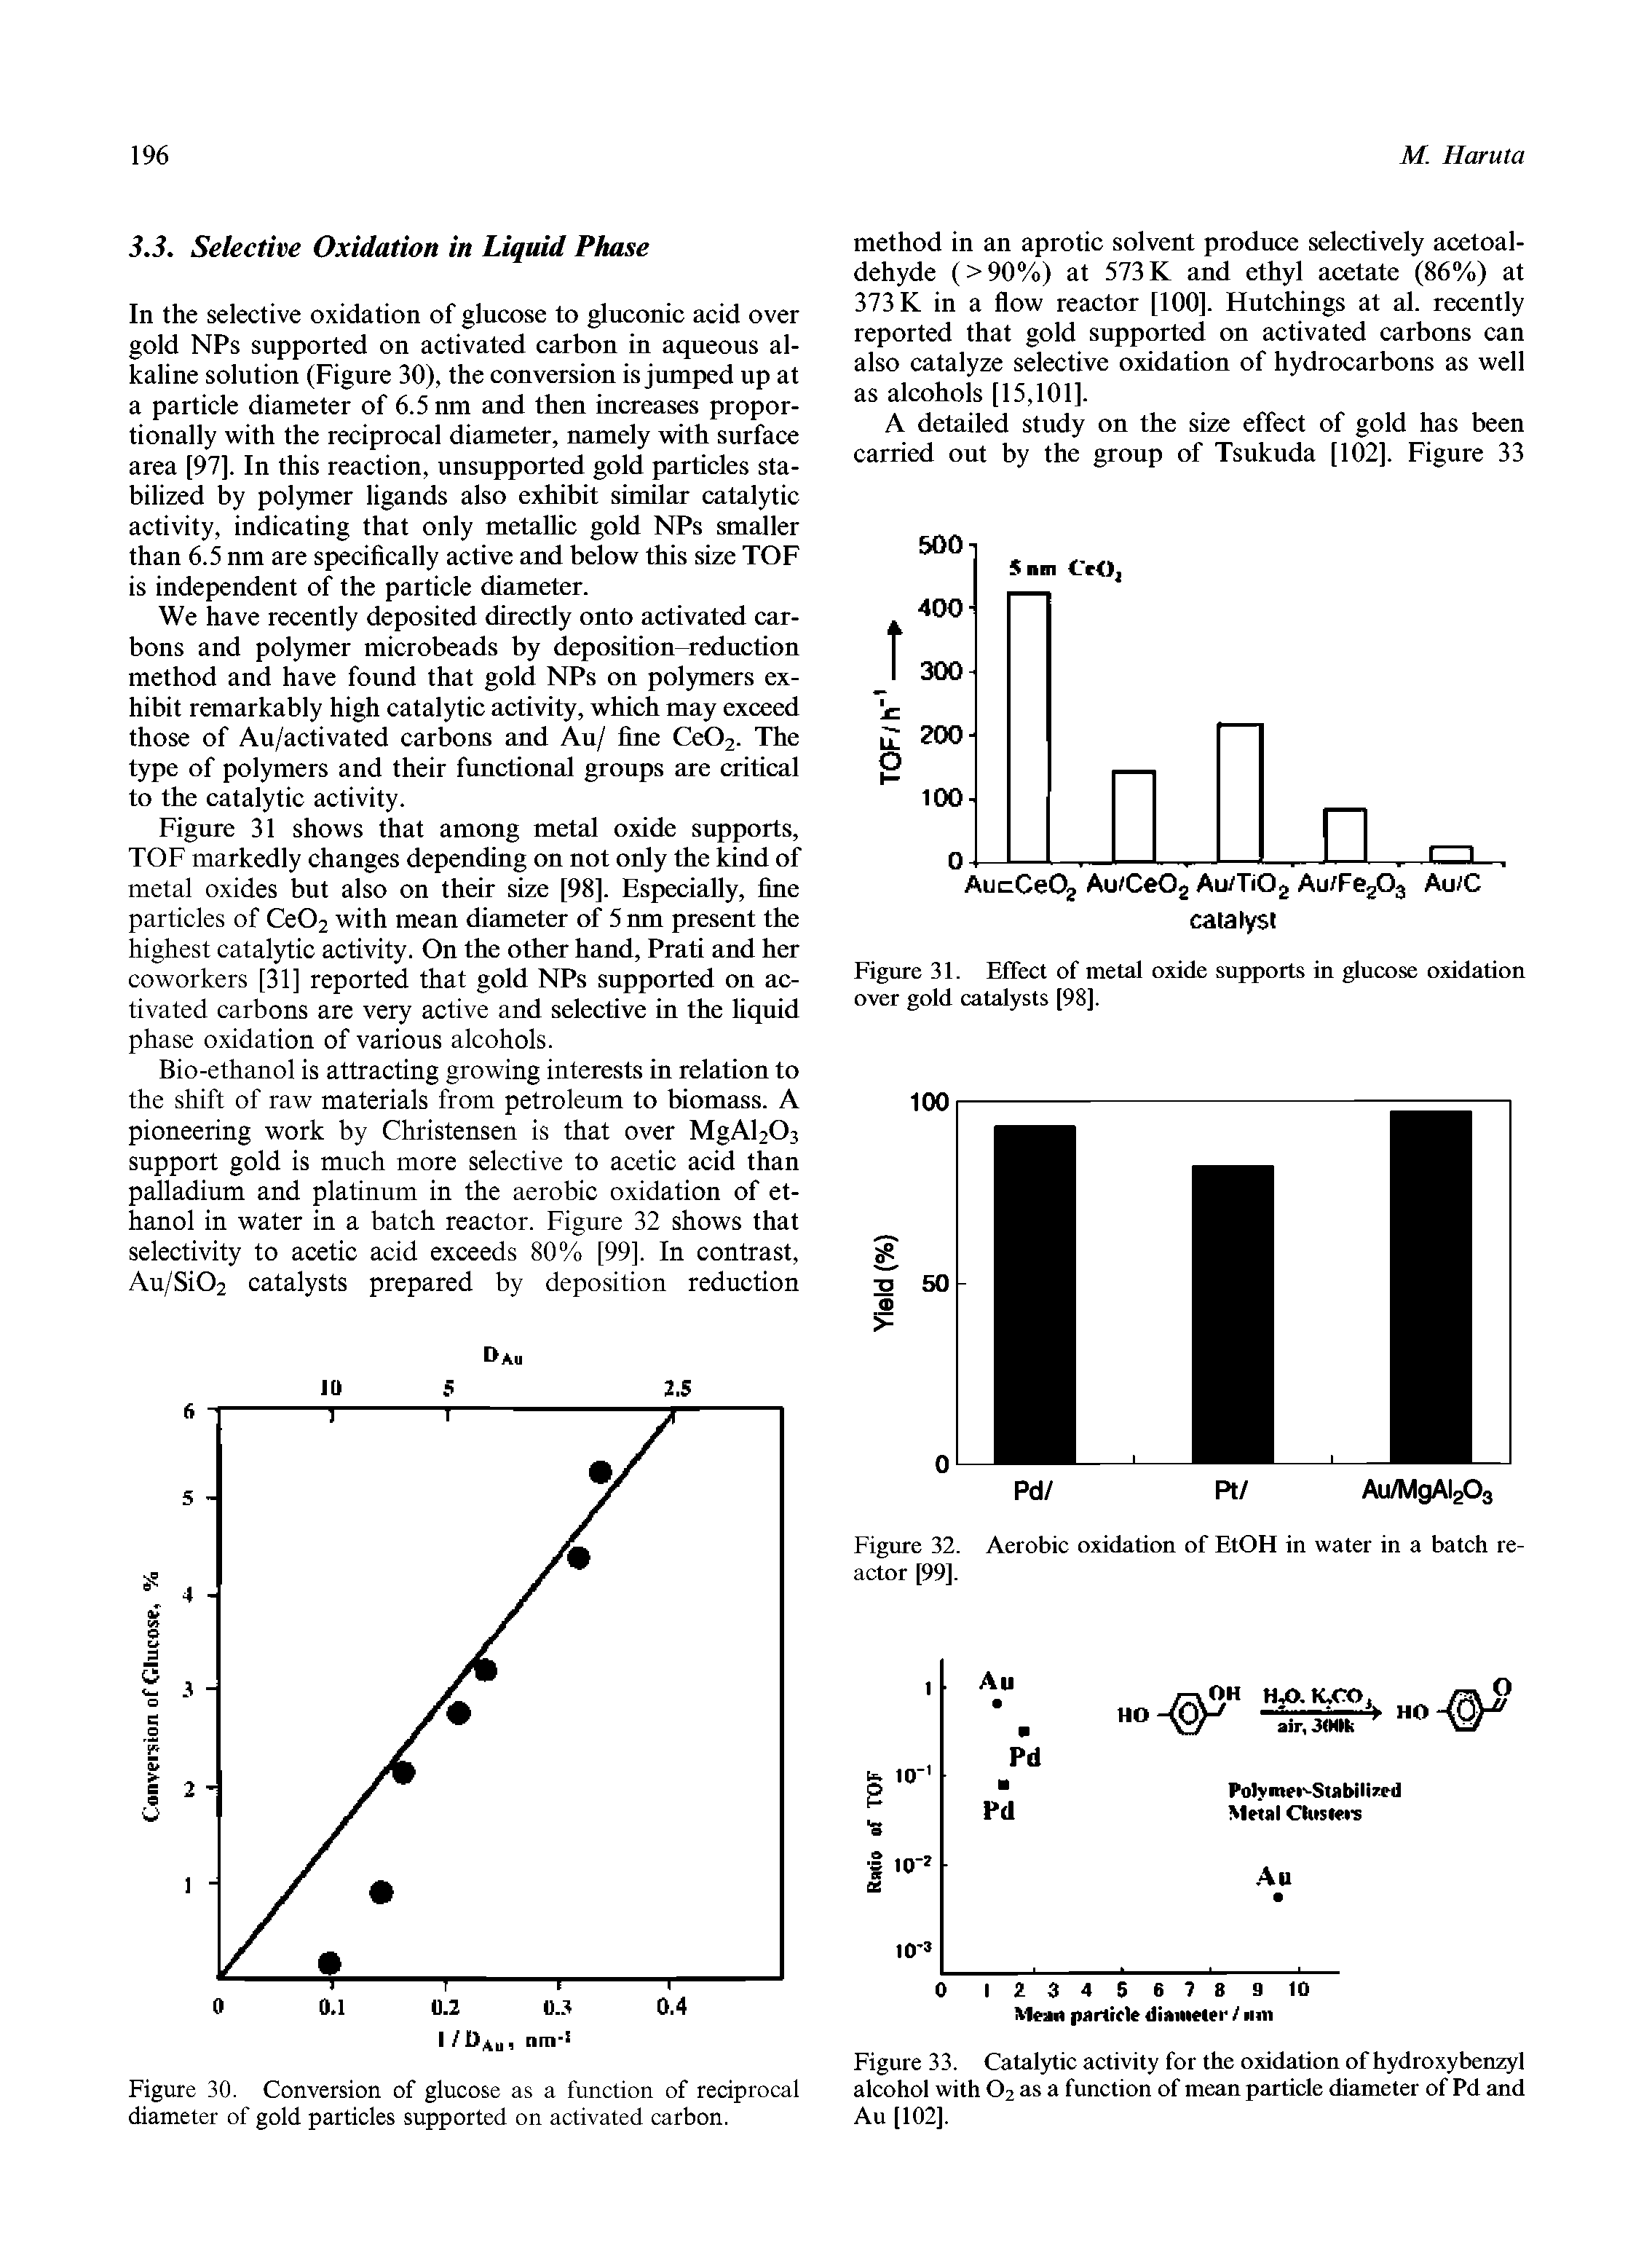 Figure 32. Aerobic oxidation of EtOH in water in a batch reactor [99].